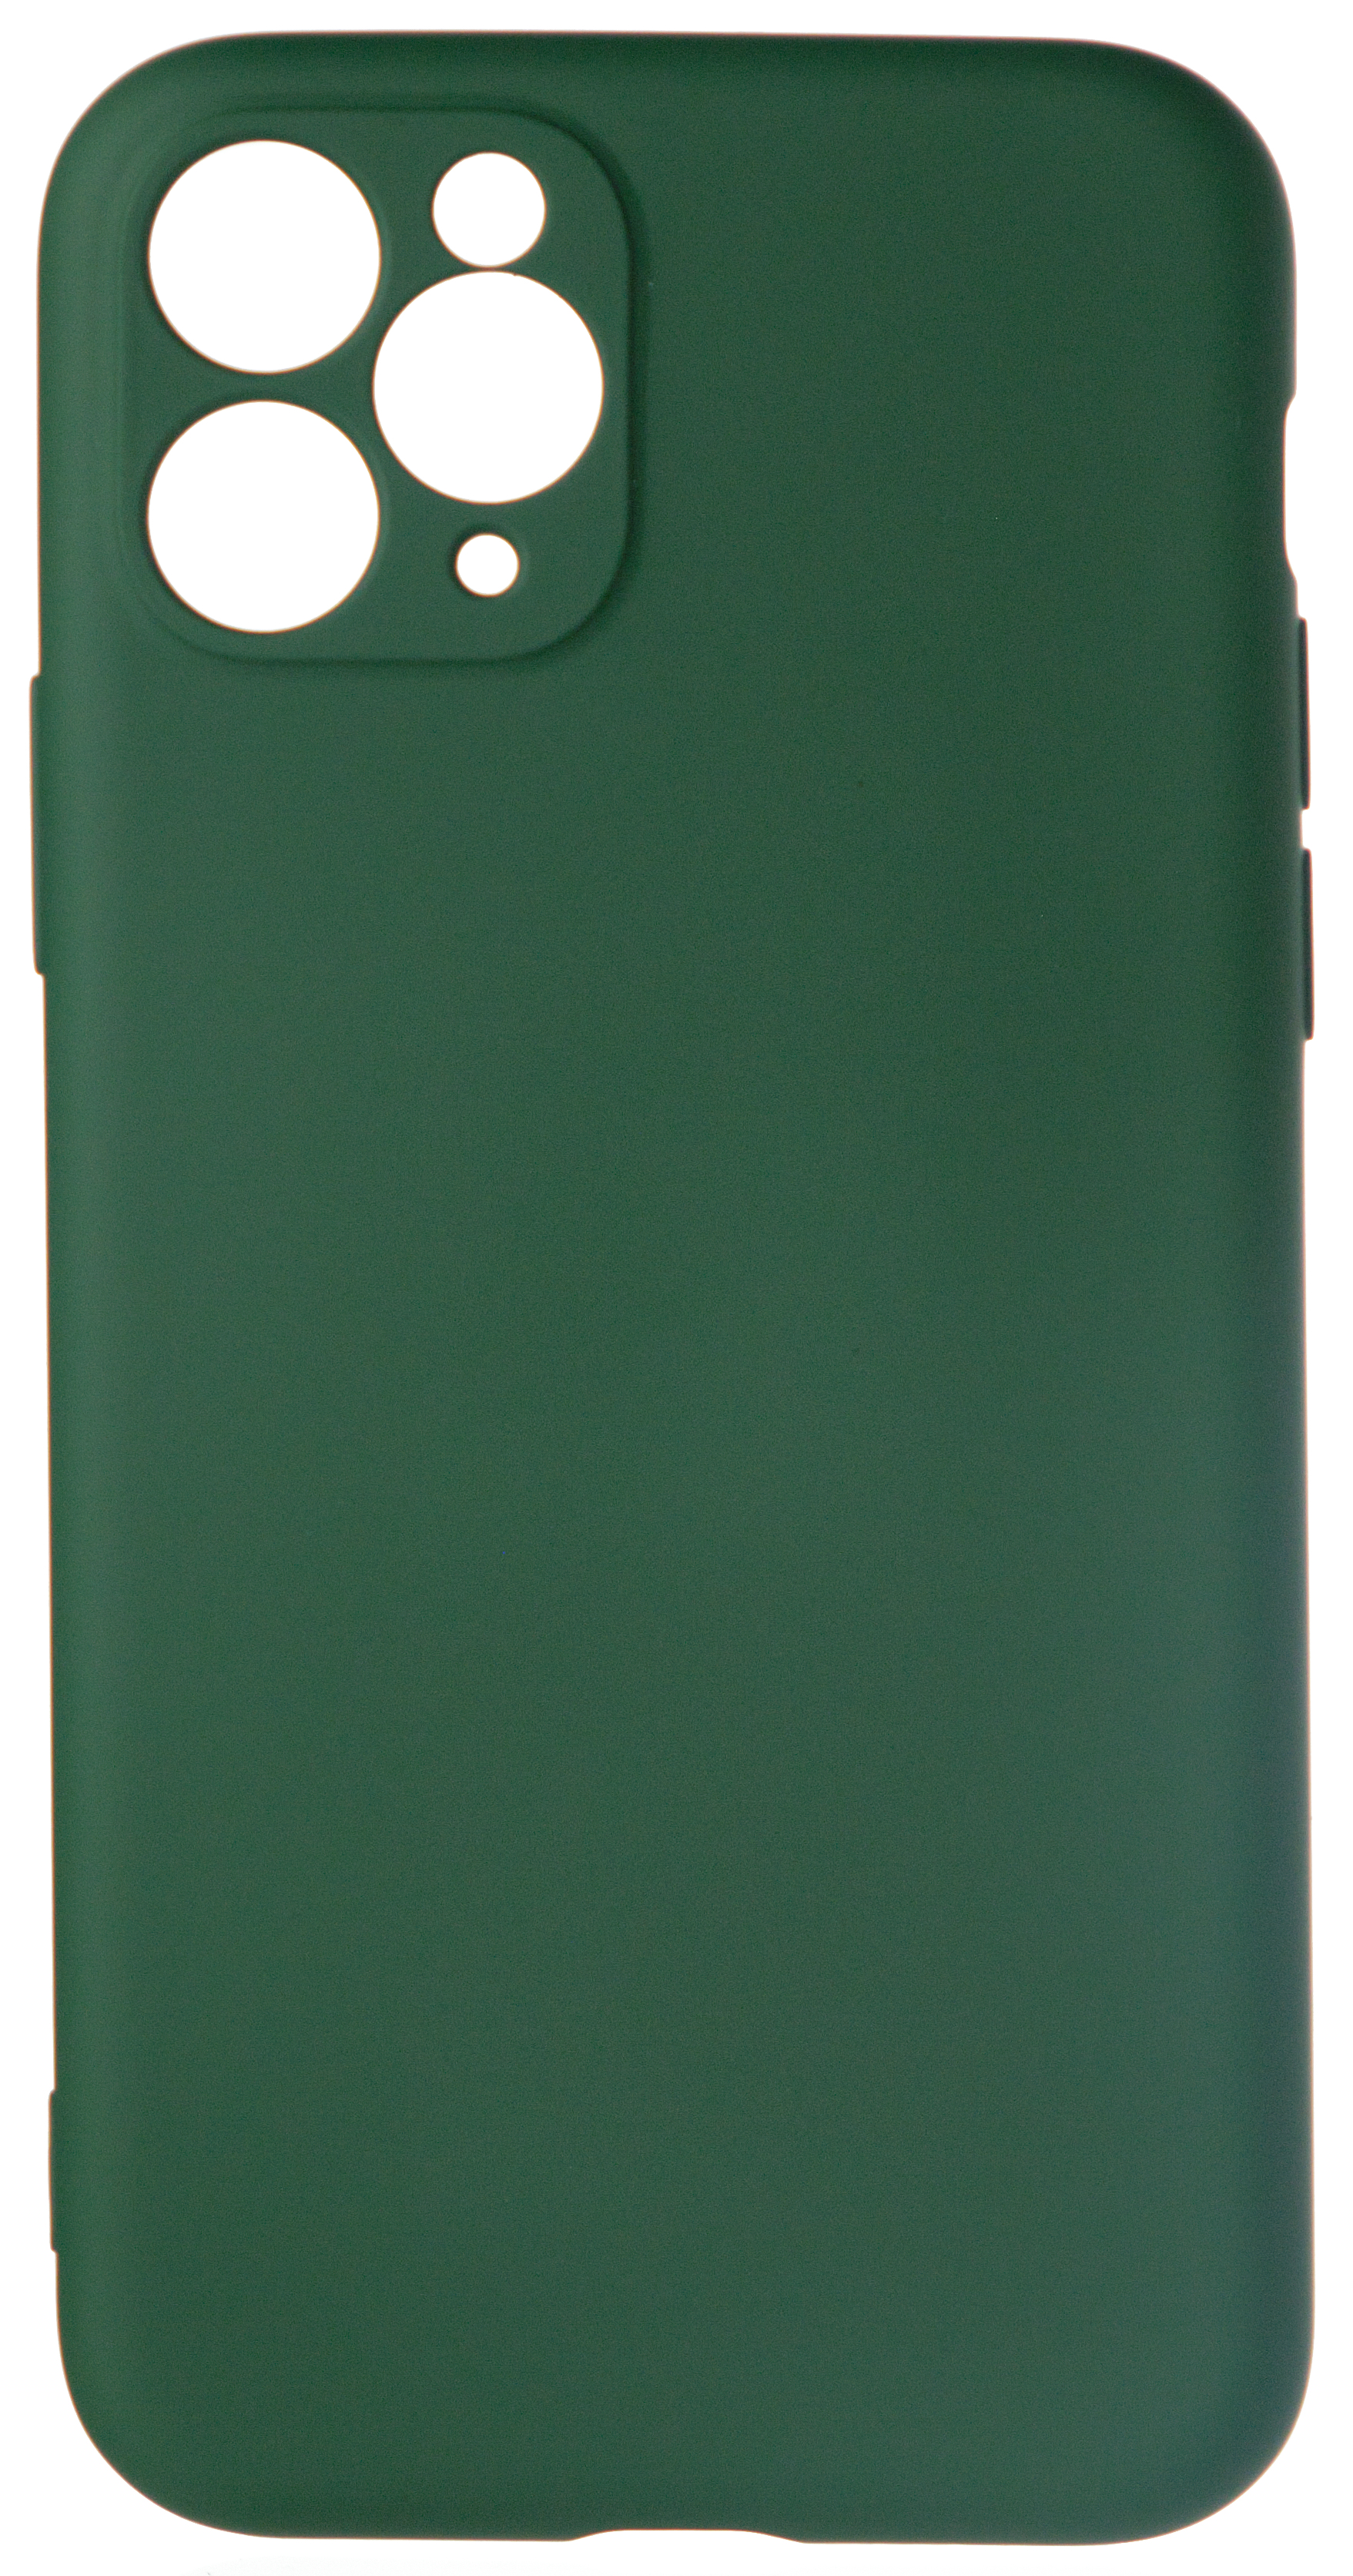 Чехол Soft-Touch для iPhone 11 Pro темно-зеленый